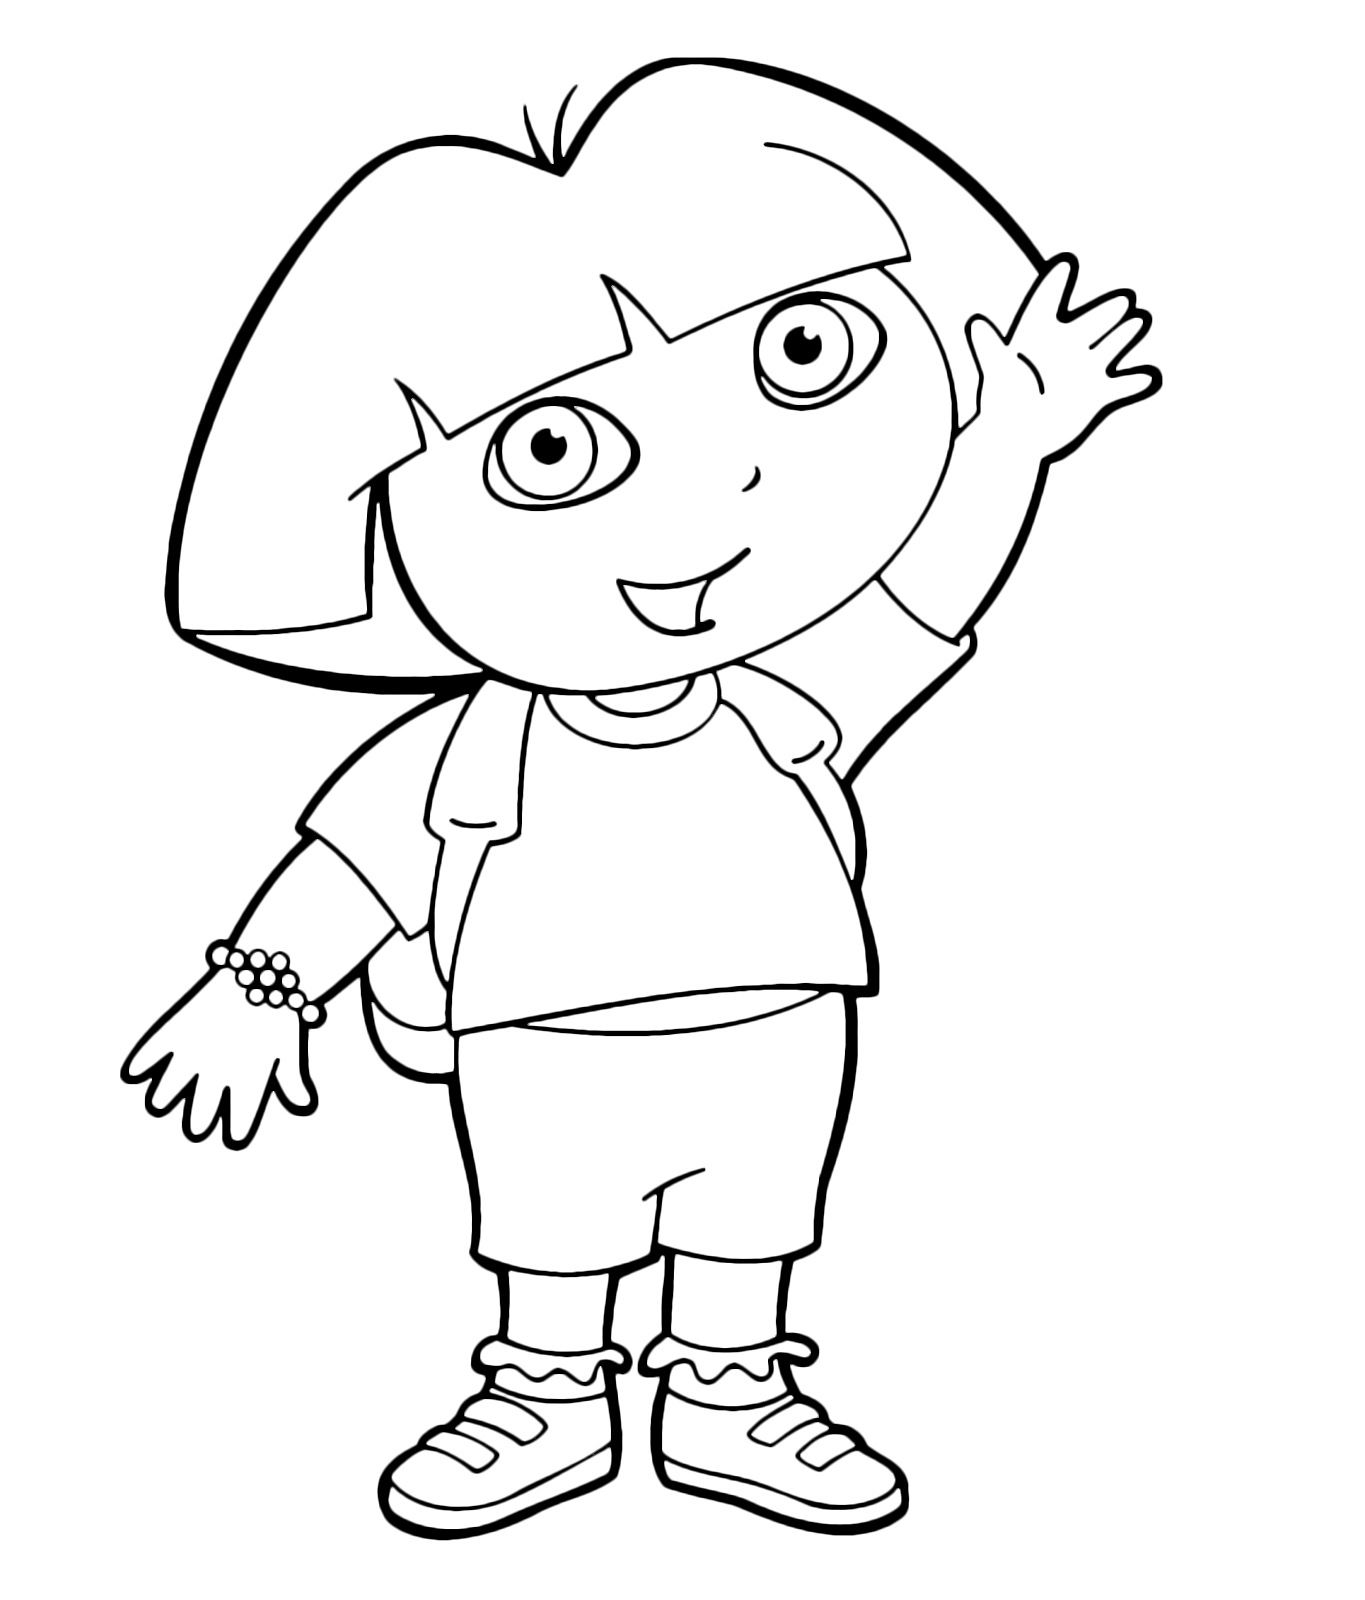 Dora l'esploratrice - Dora l'esploratrice saluta con la mano